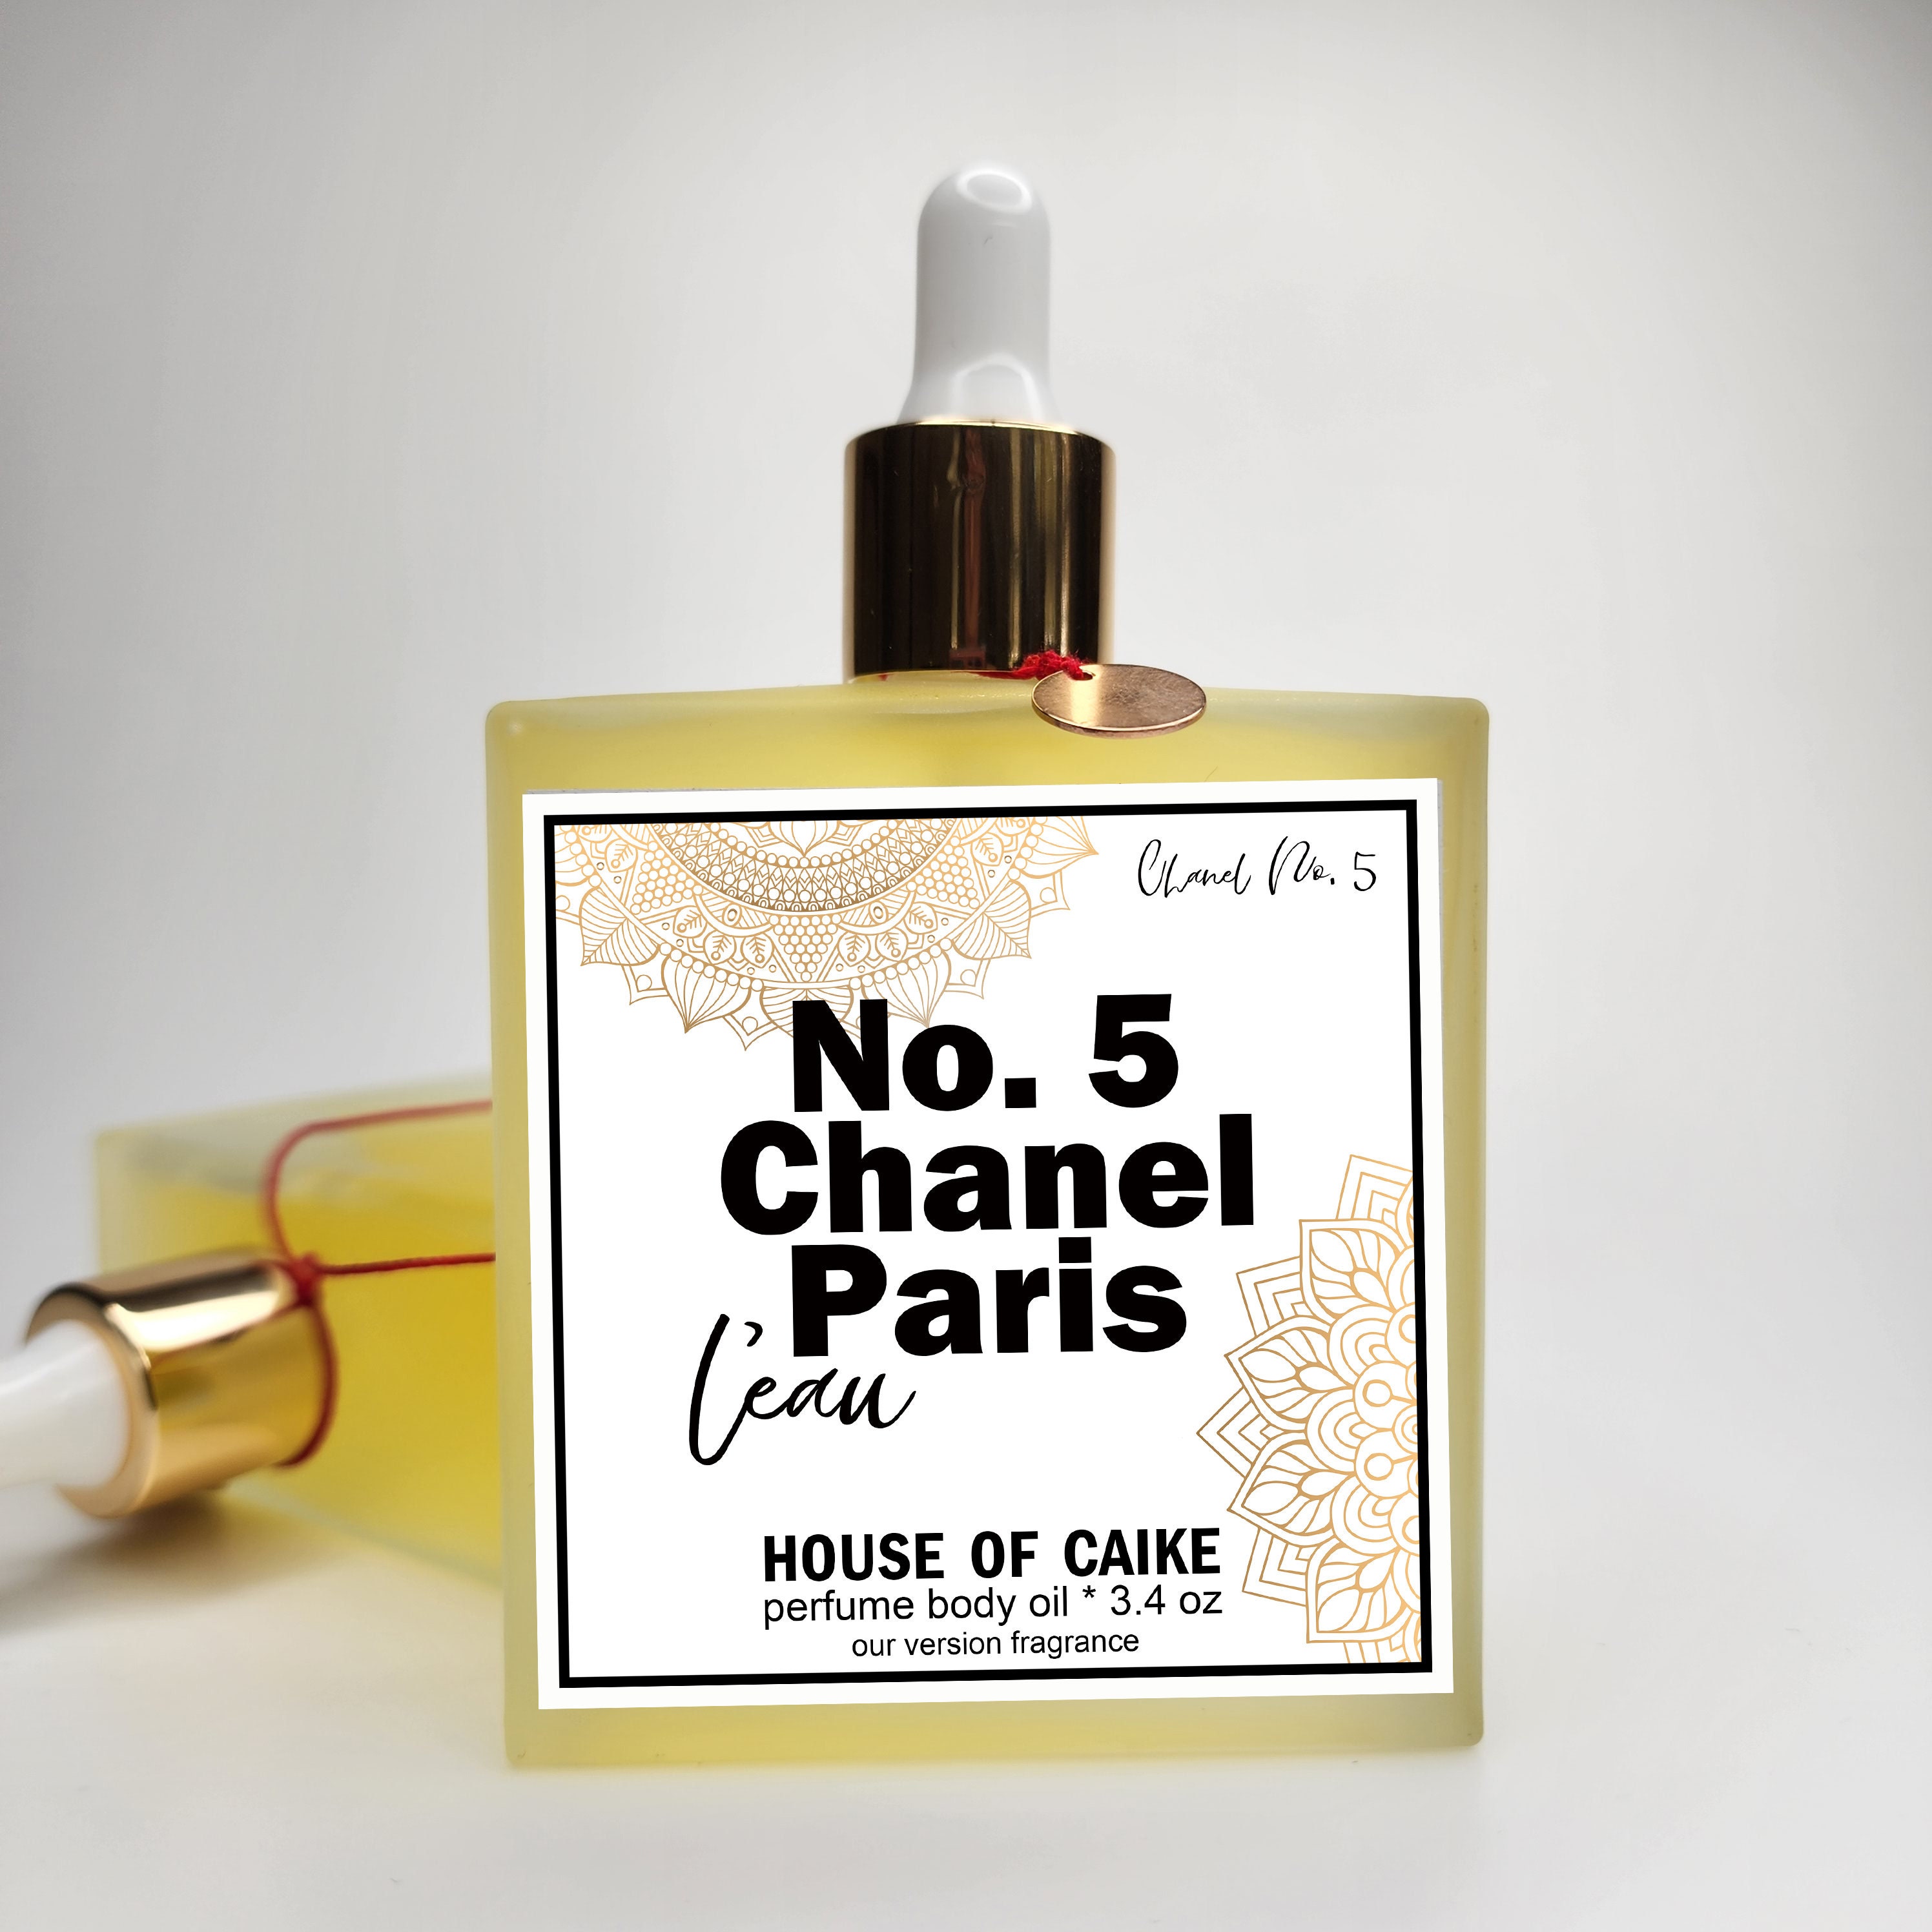 CHANEL NO.5 L'EAU Perfume Body Oil. Impressions of Chanel -  Denmark